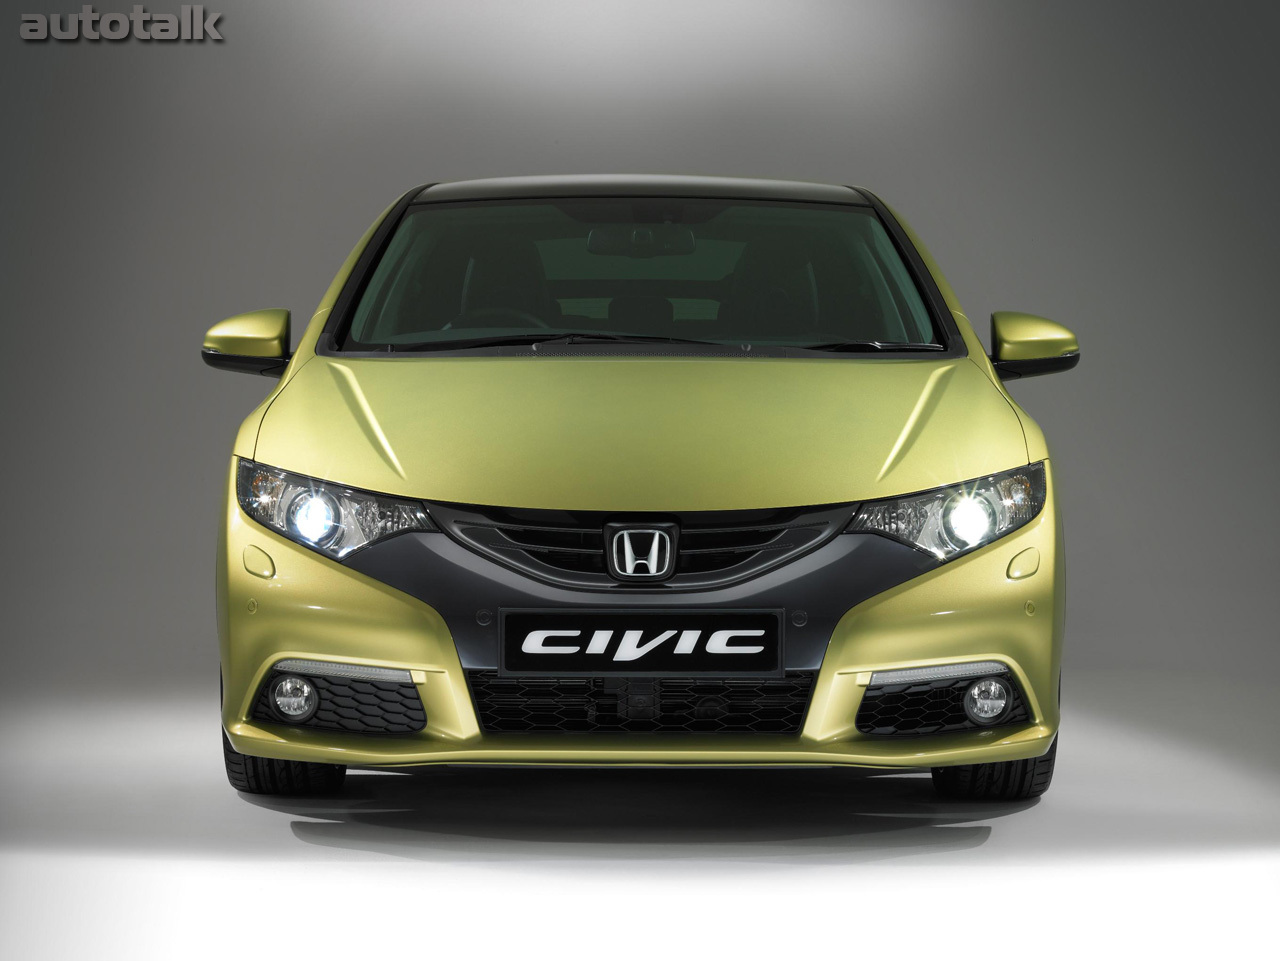 2012 Honda Civic Coupe Euro